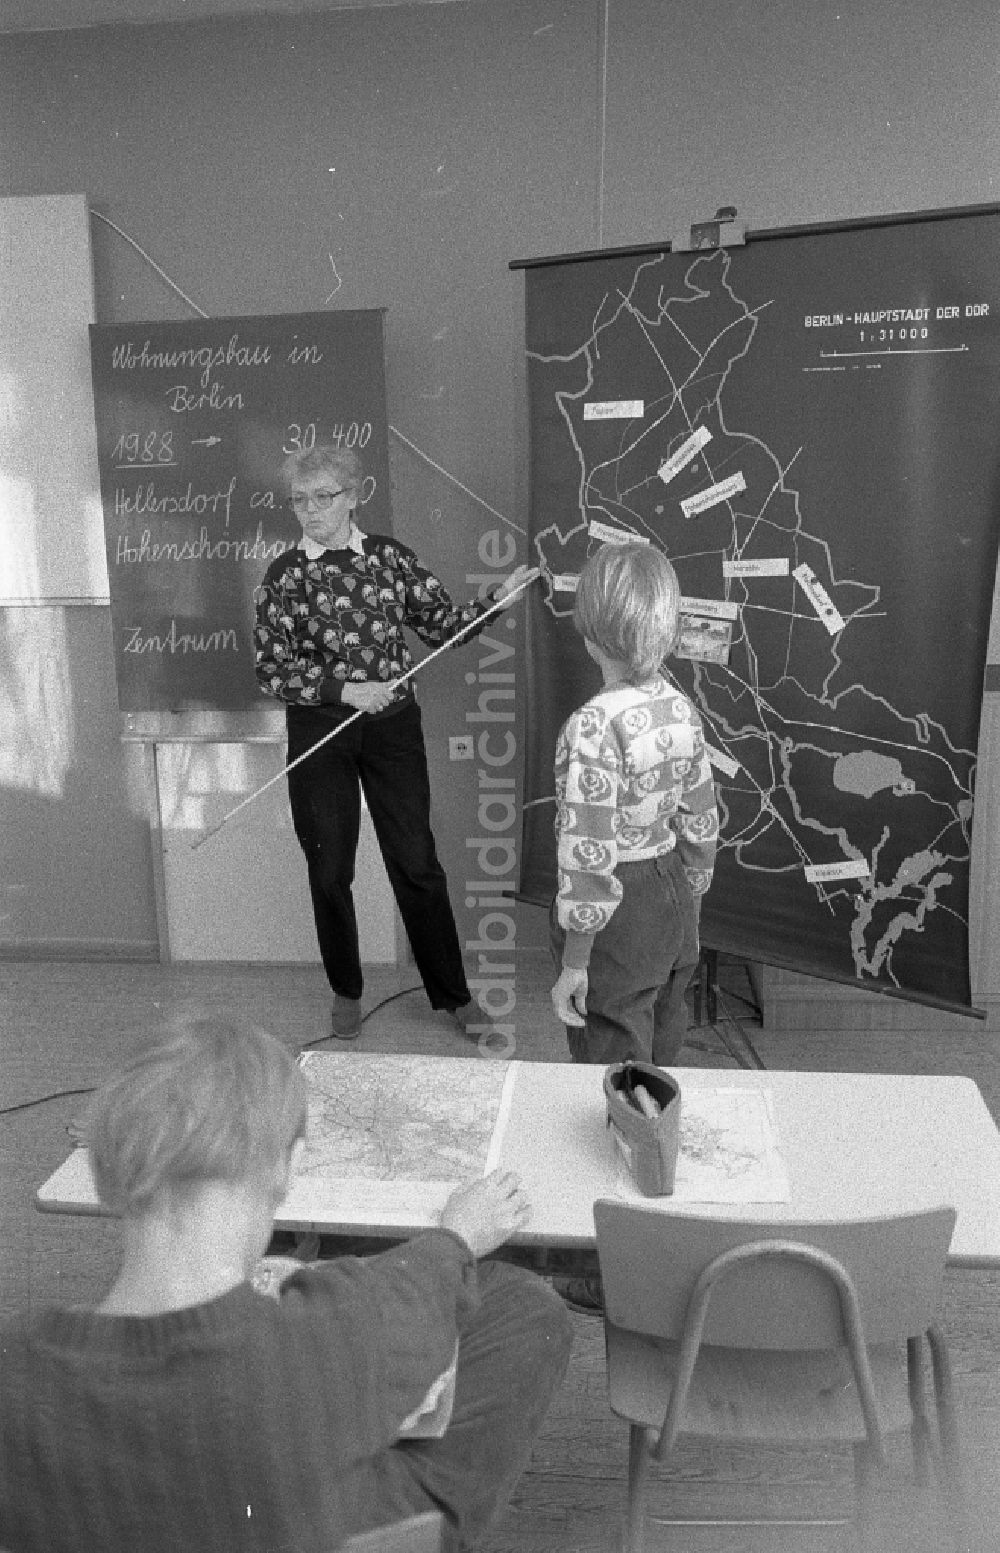 DDR-Fotoarchiv: Berlin - Heimatkundeunterricht in der 31. Oberschule Hilde Coppi in Berlin, der ehemaligen Hauptstadt der DDR, Deutsche Demokratische Republik